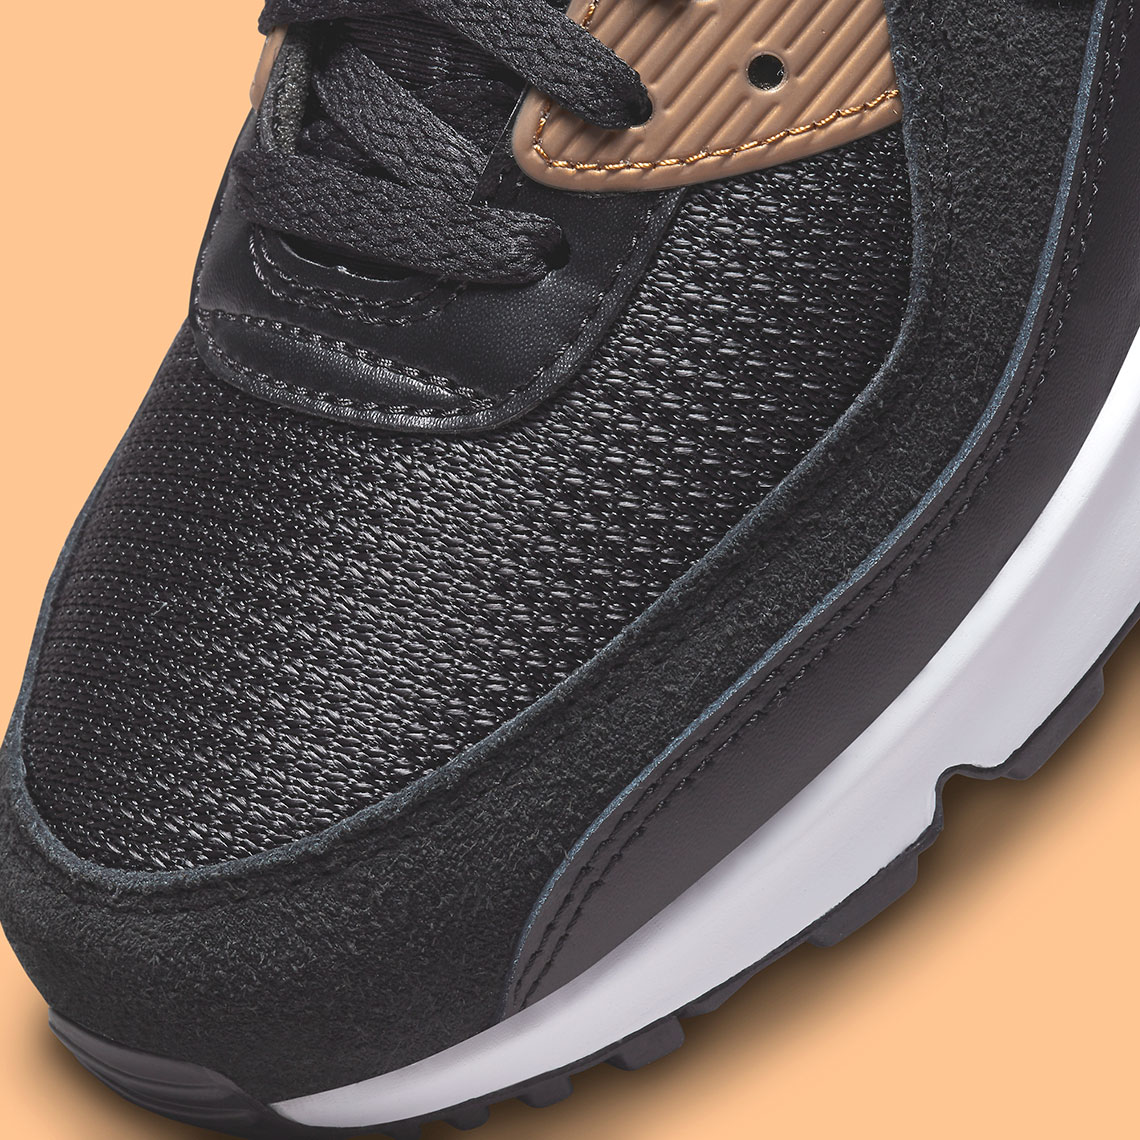 Nike Air Max 90 Black/Gold DM7557-001 | SneakerNews.com